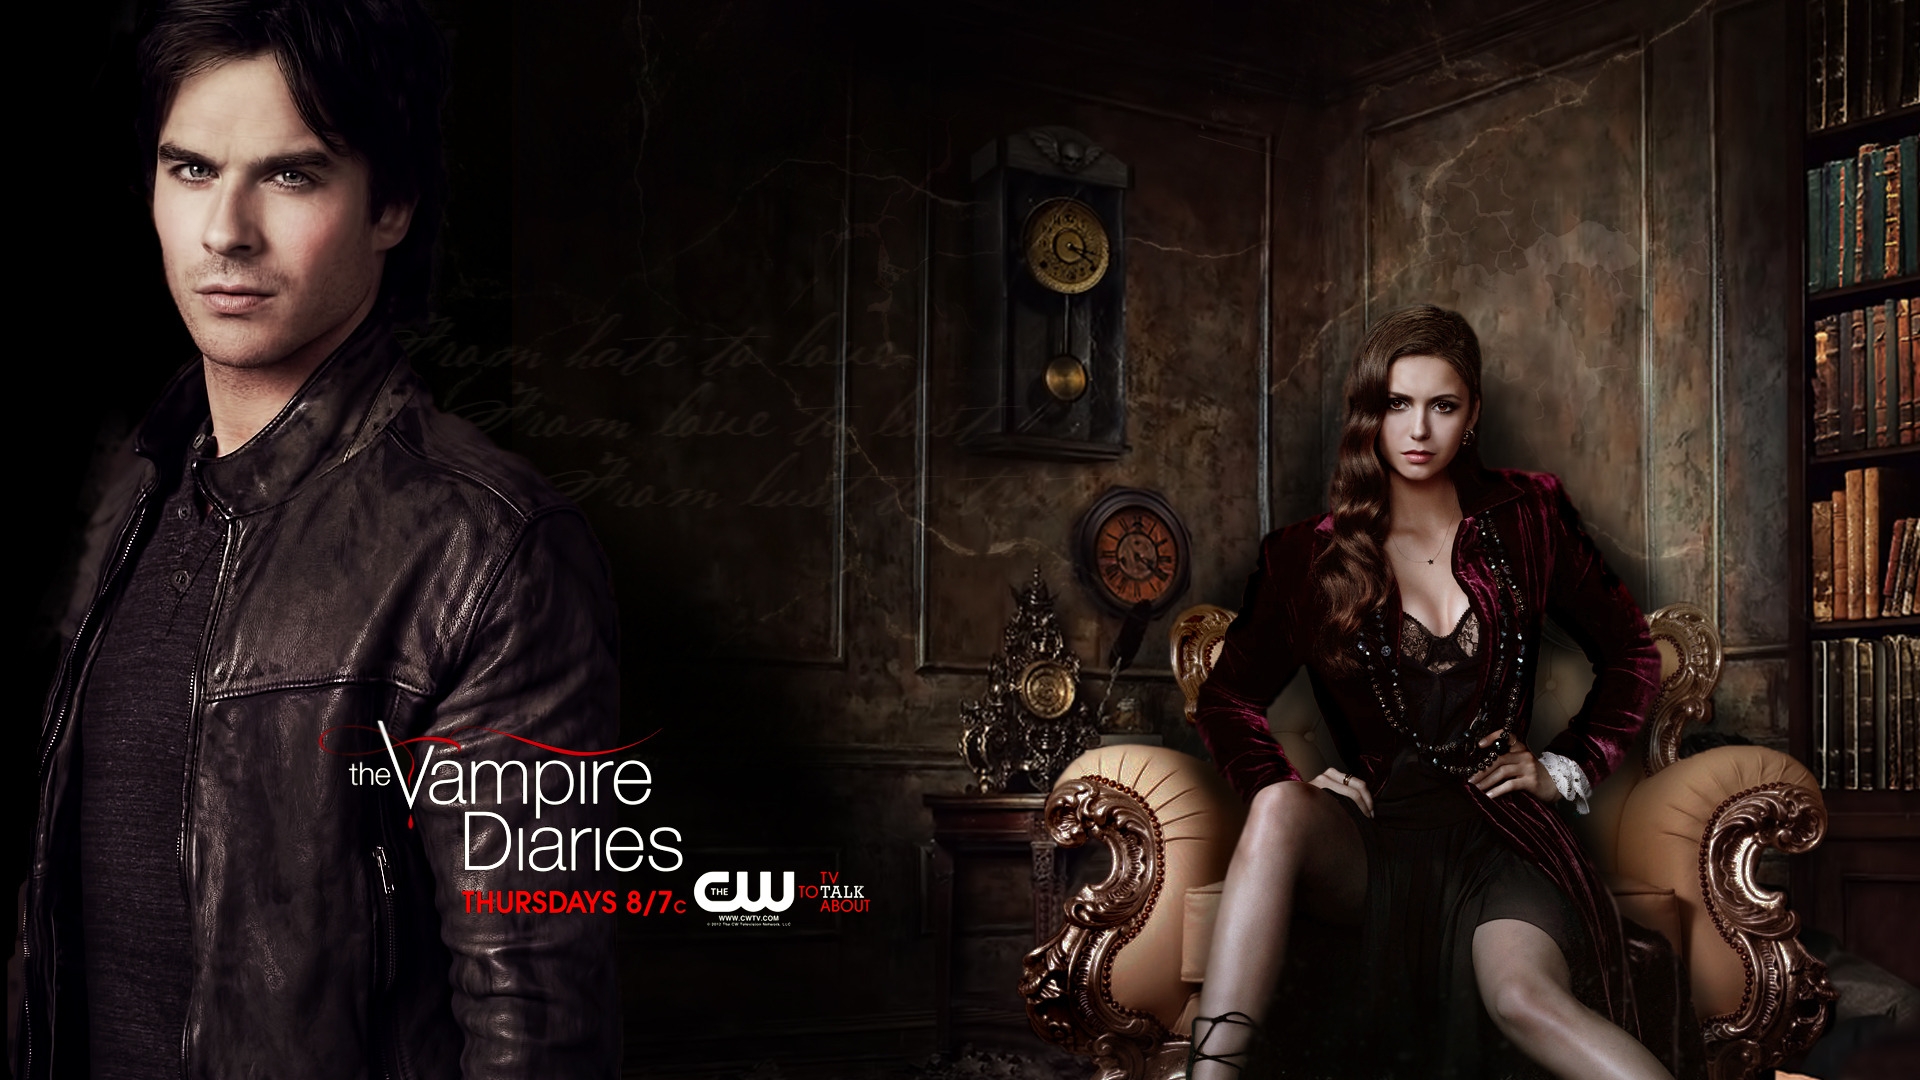 The Vampire Diaries Season 4 for 1920 x 1080 HDTV 1080p resolution